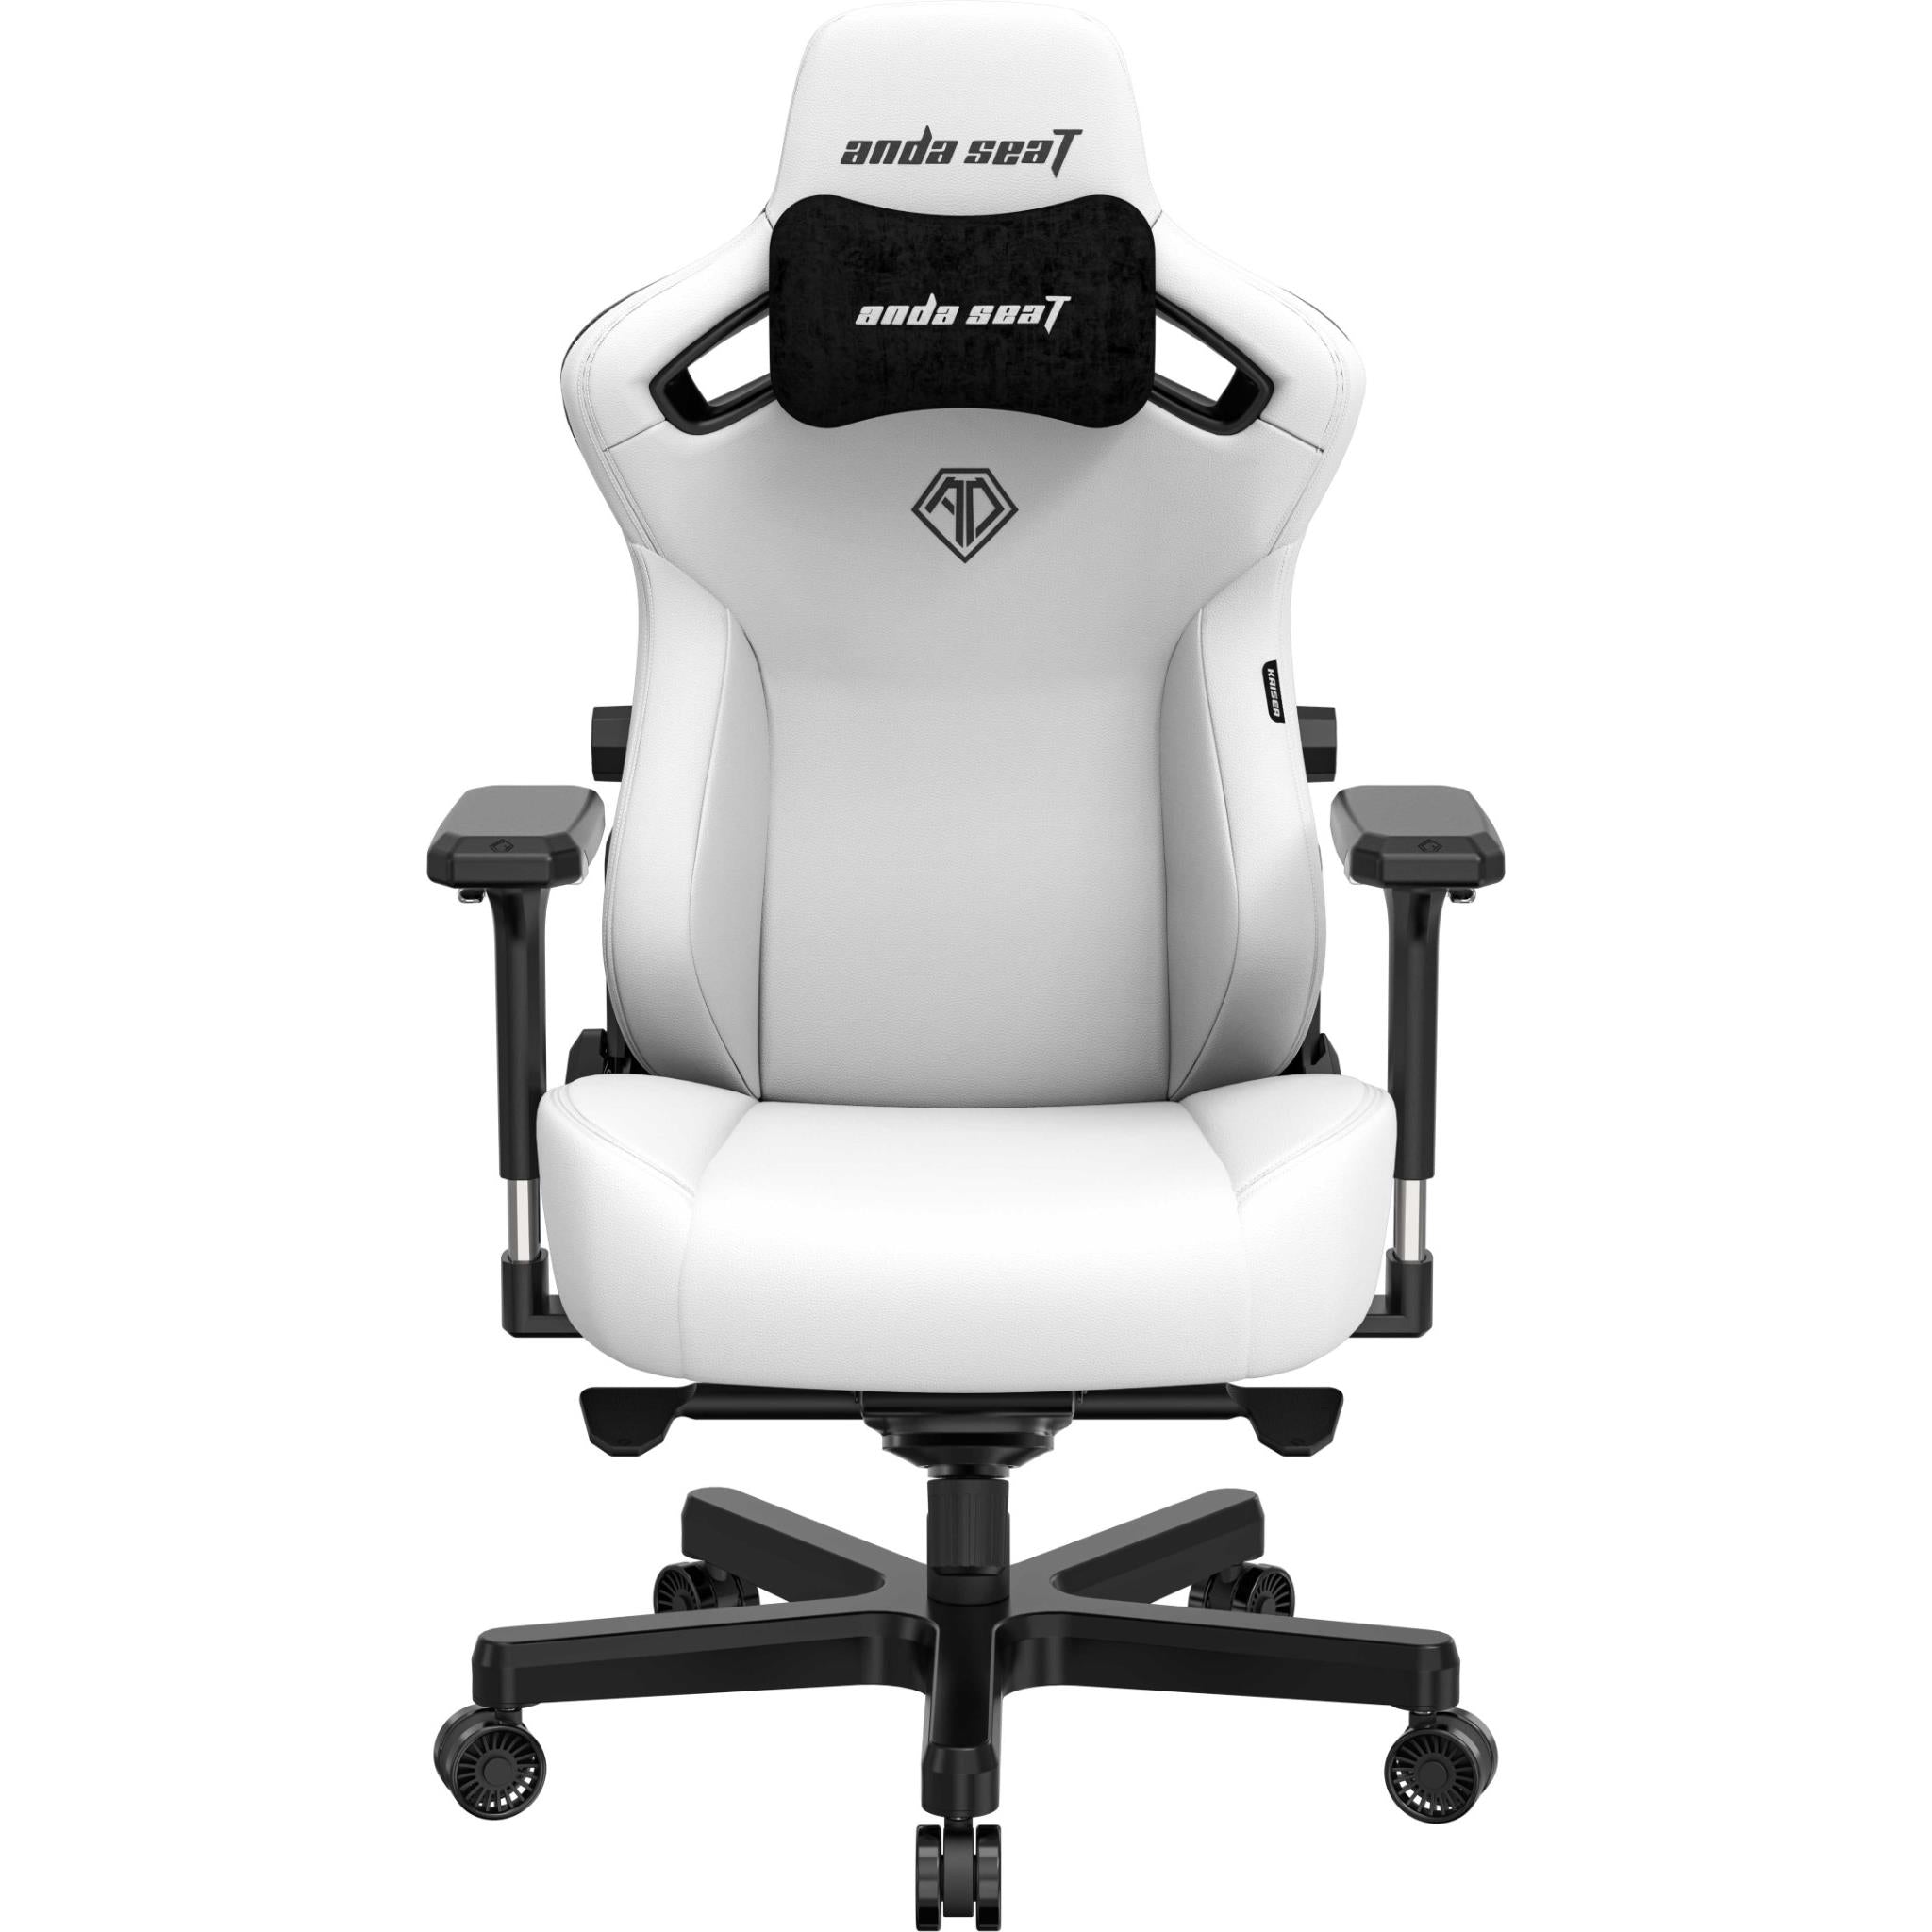 anda seat kaiser 3 series premium gaming chair white (xl)